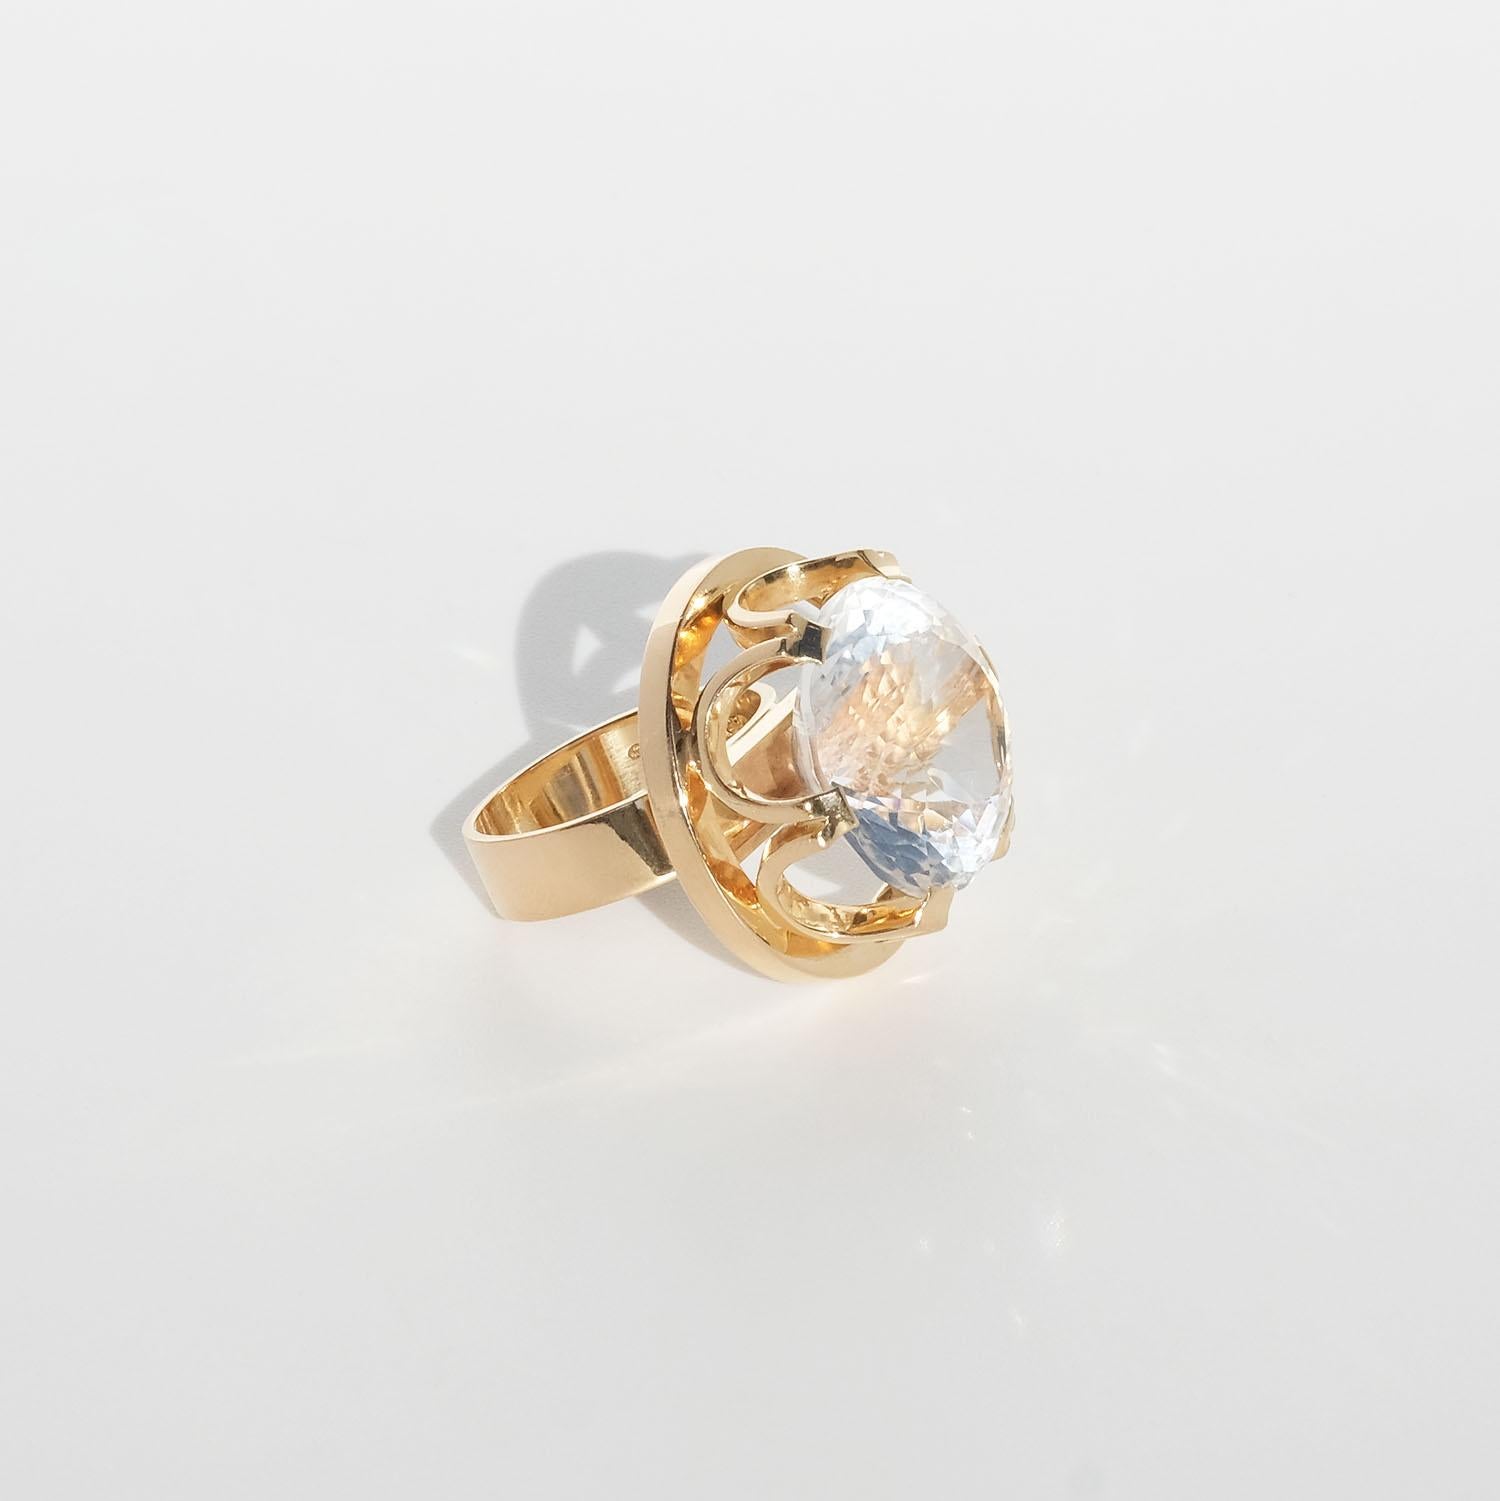 Vintage 18k Gold and Rock Crystal Ring by Finnish Master Kaunis Koru For Sale 5